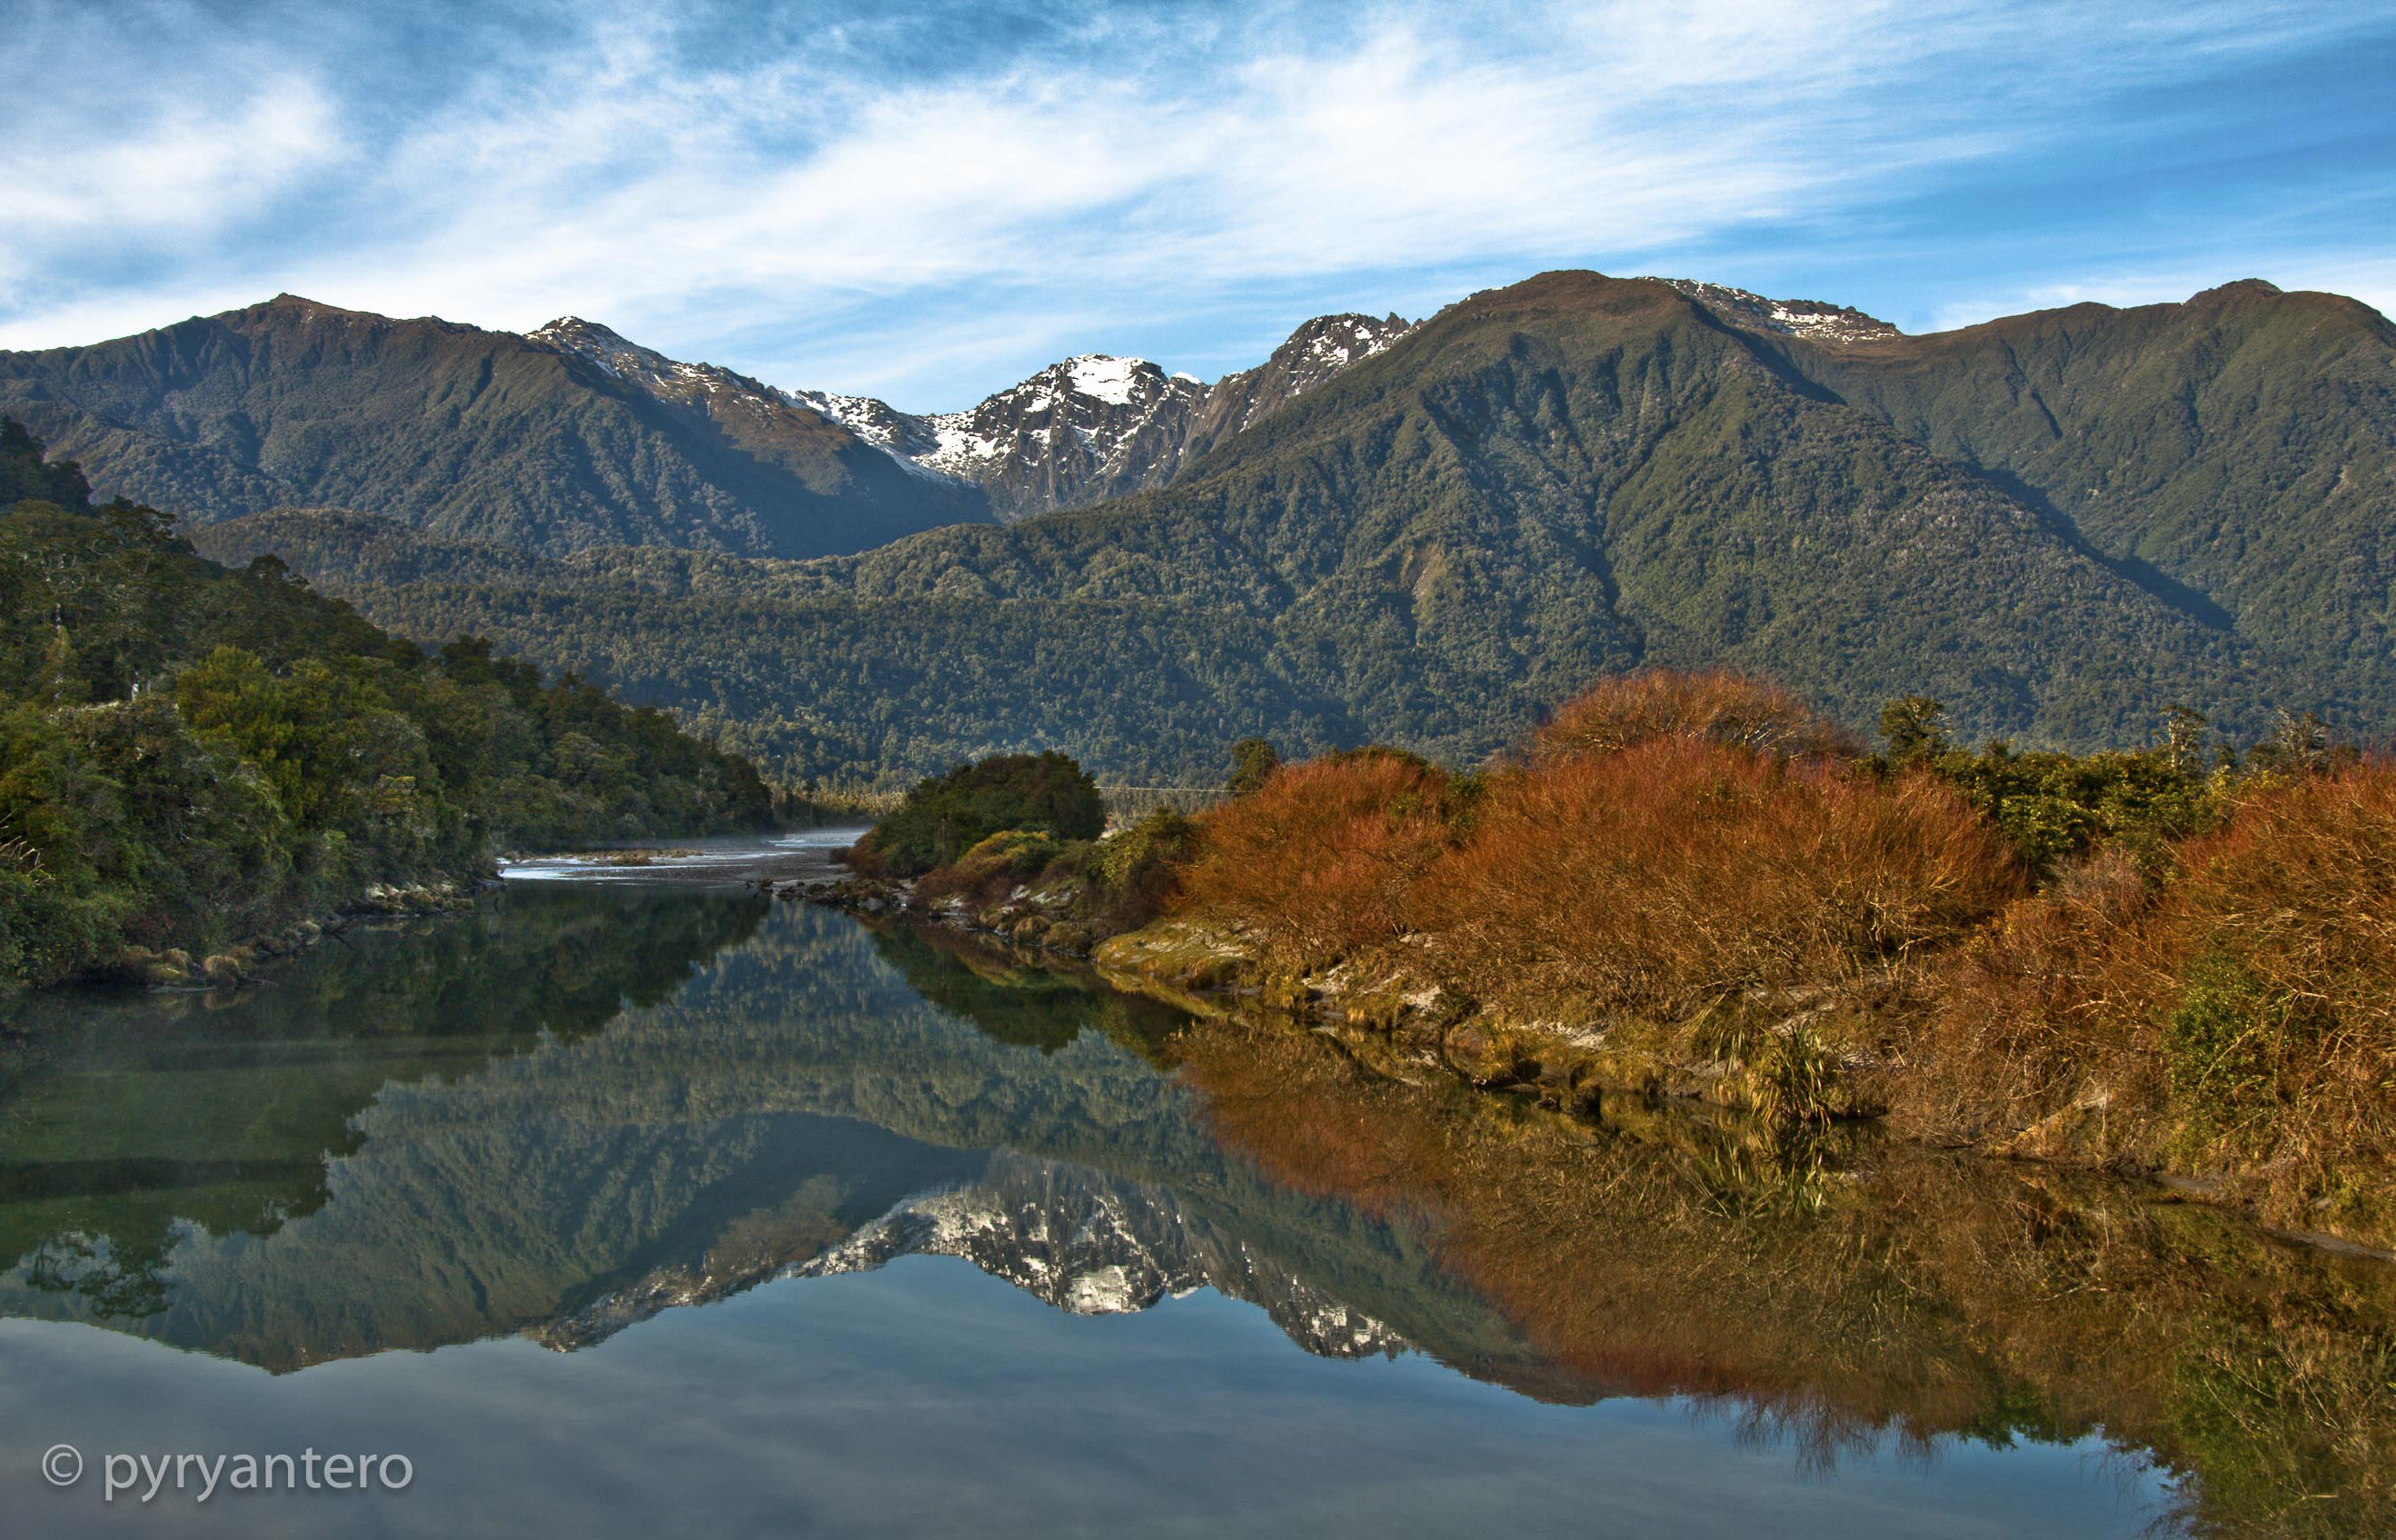 Mirroring Landscape in New Zealand. Pyry Antero Pietiläinen Photography, pyryantero